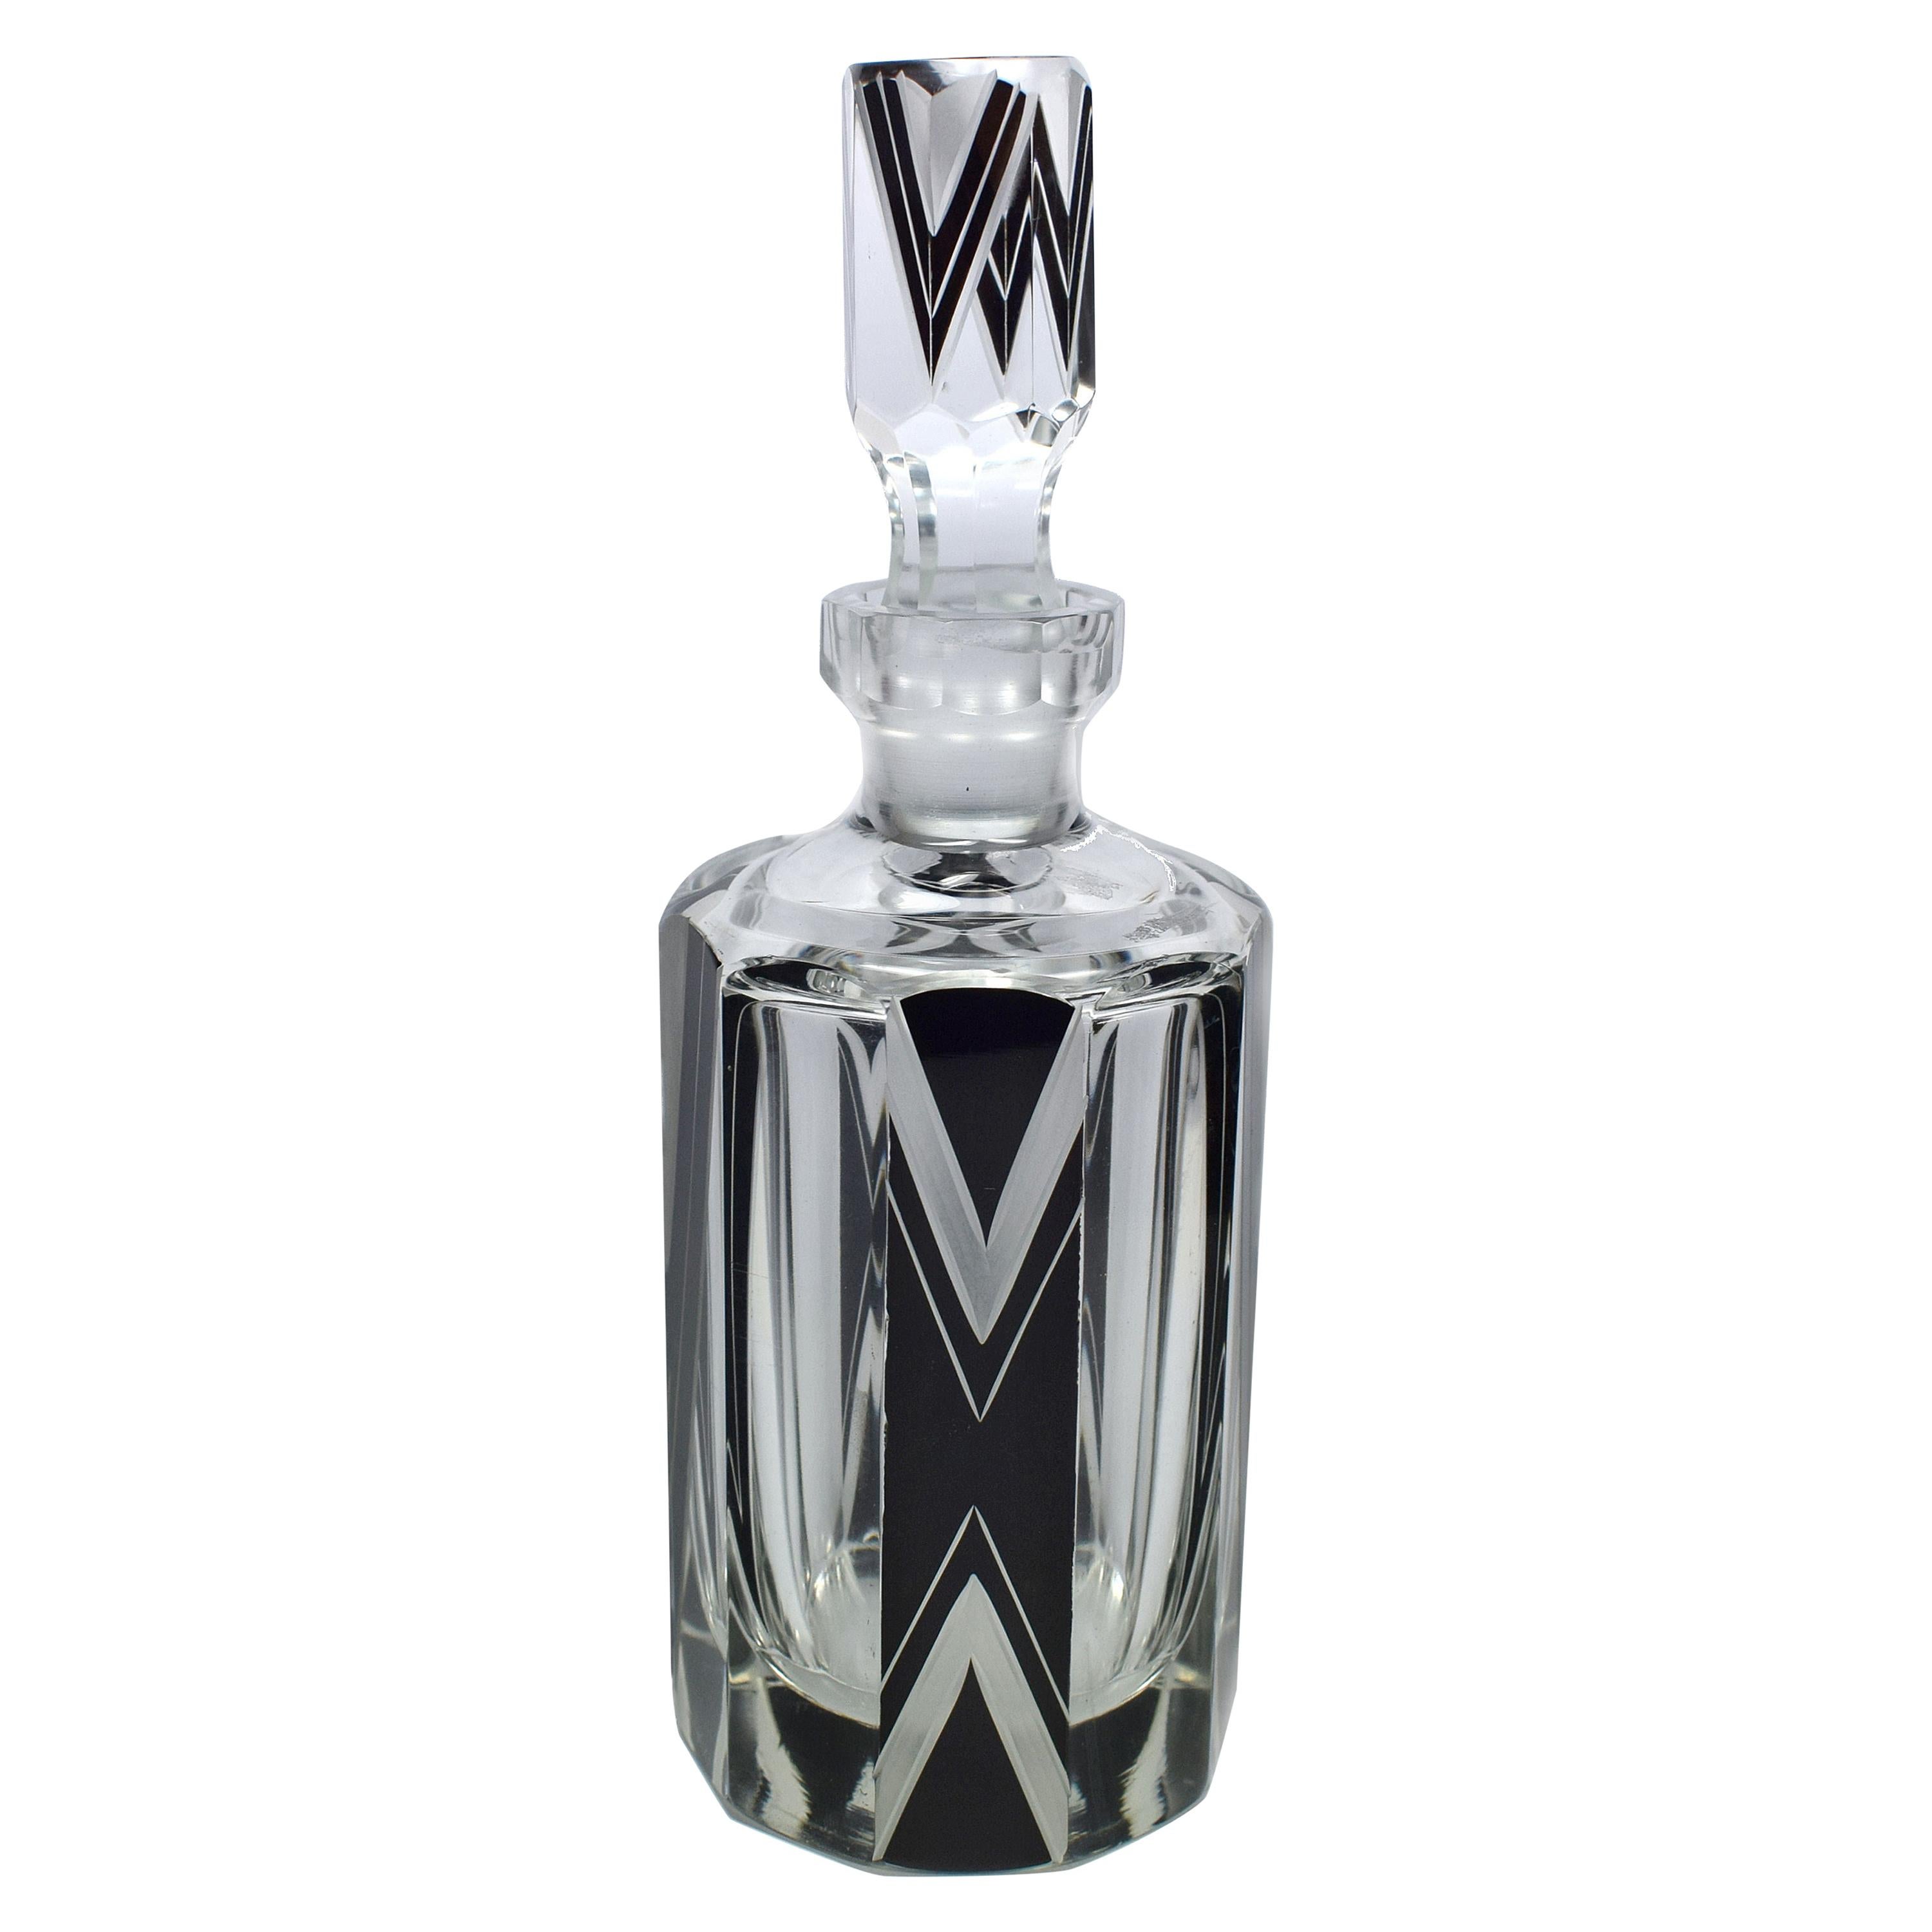 1930s Art Deco Enamel and Glass Perfume bottle